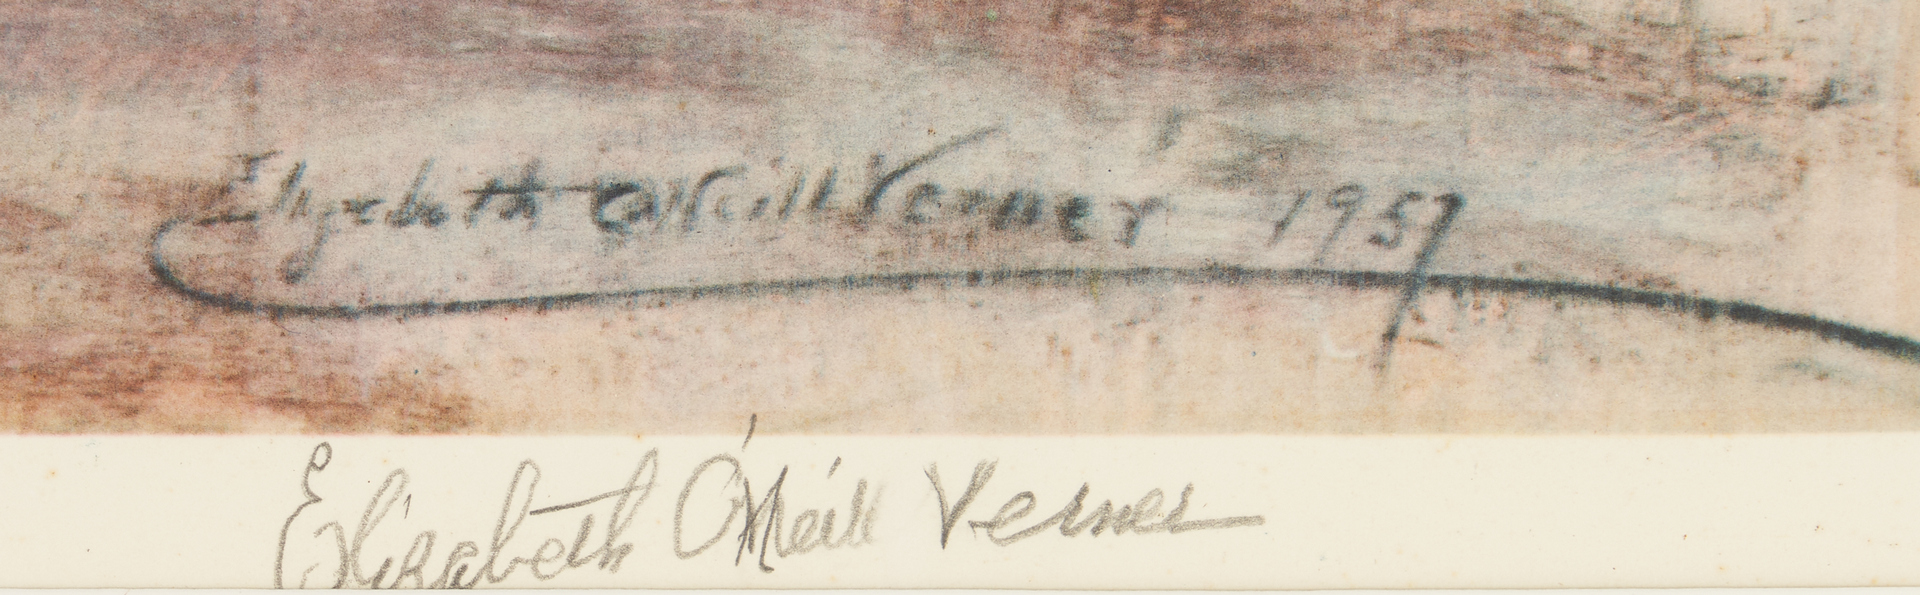 Lot 371: 2 Elizabeth O'Neill Verner Charleston Prints, One Pencil Signed